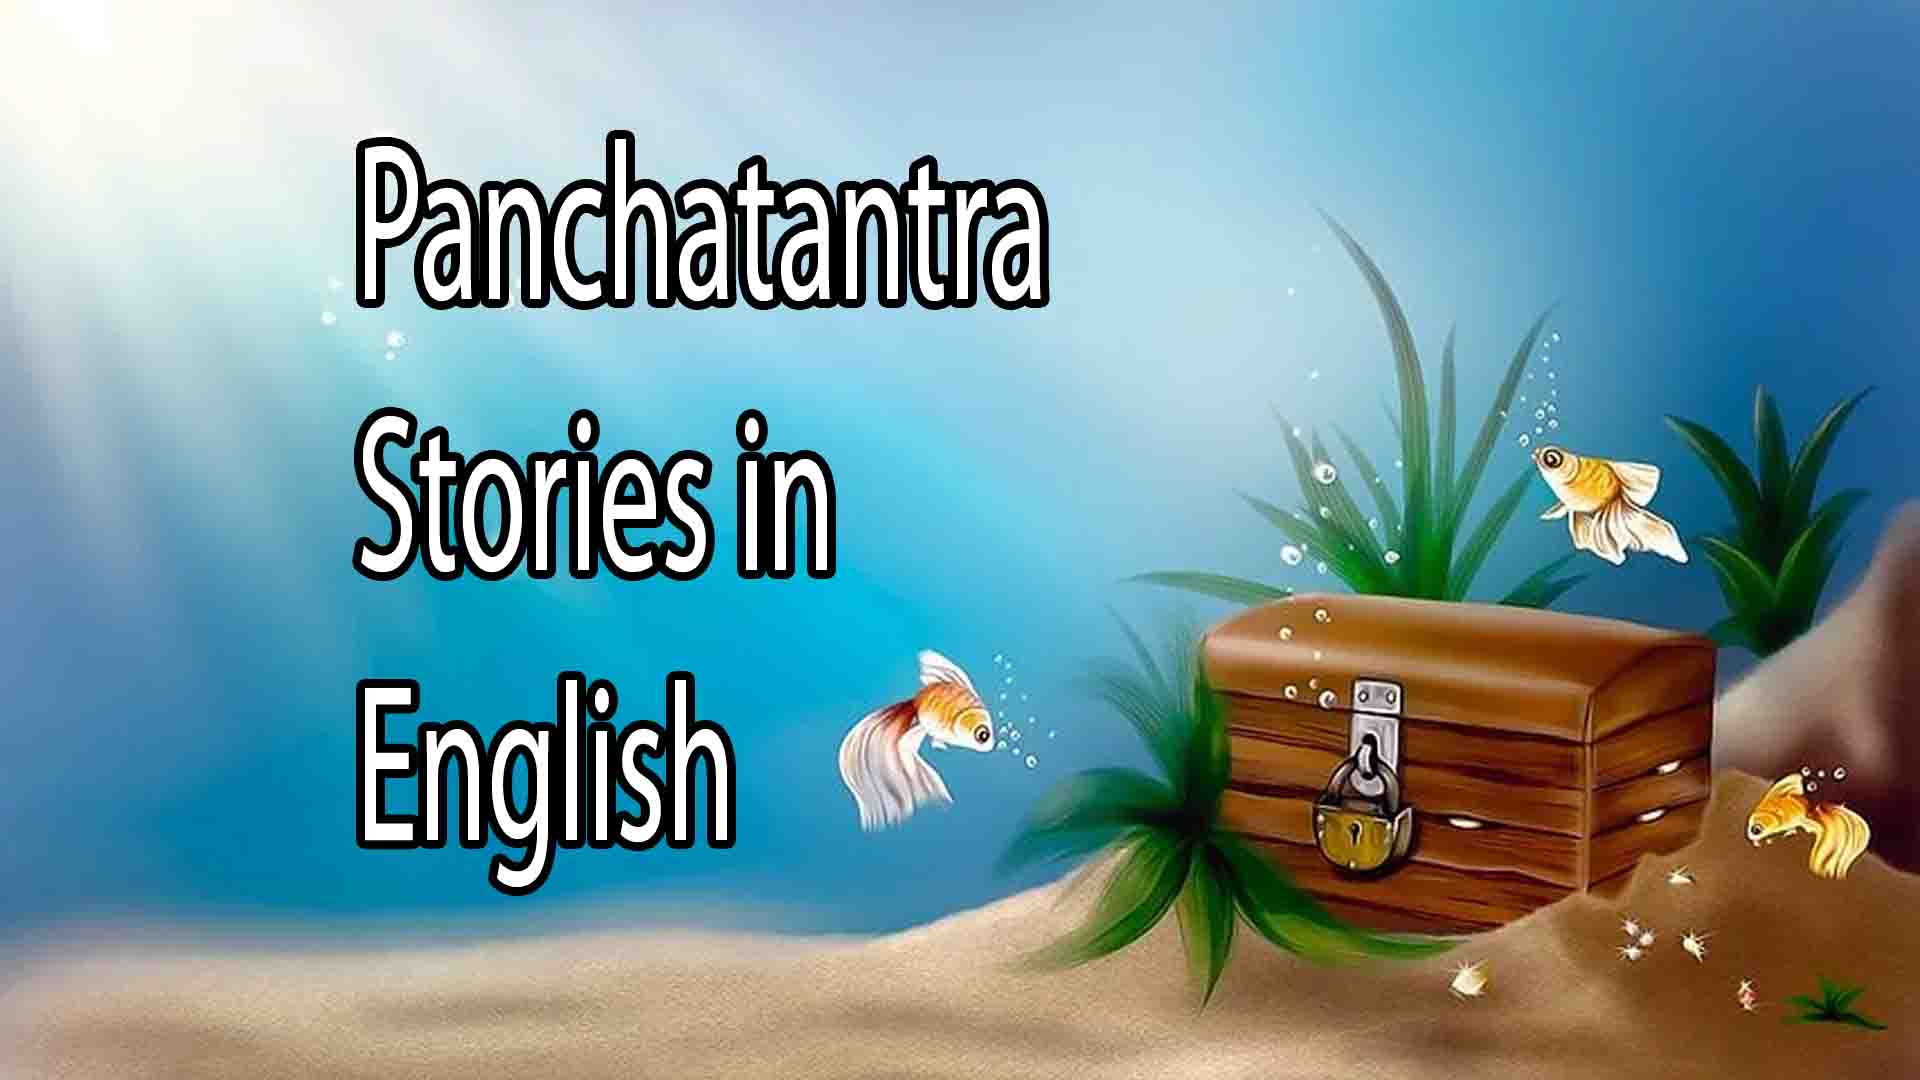 Panchatantra Stories in English